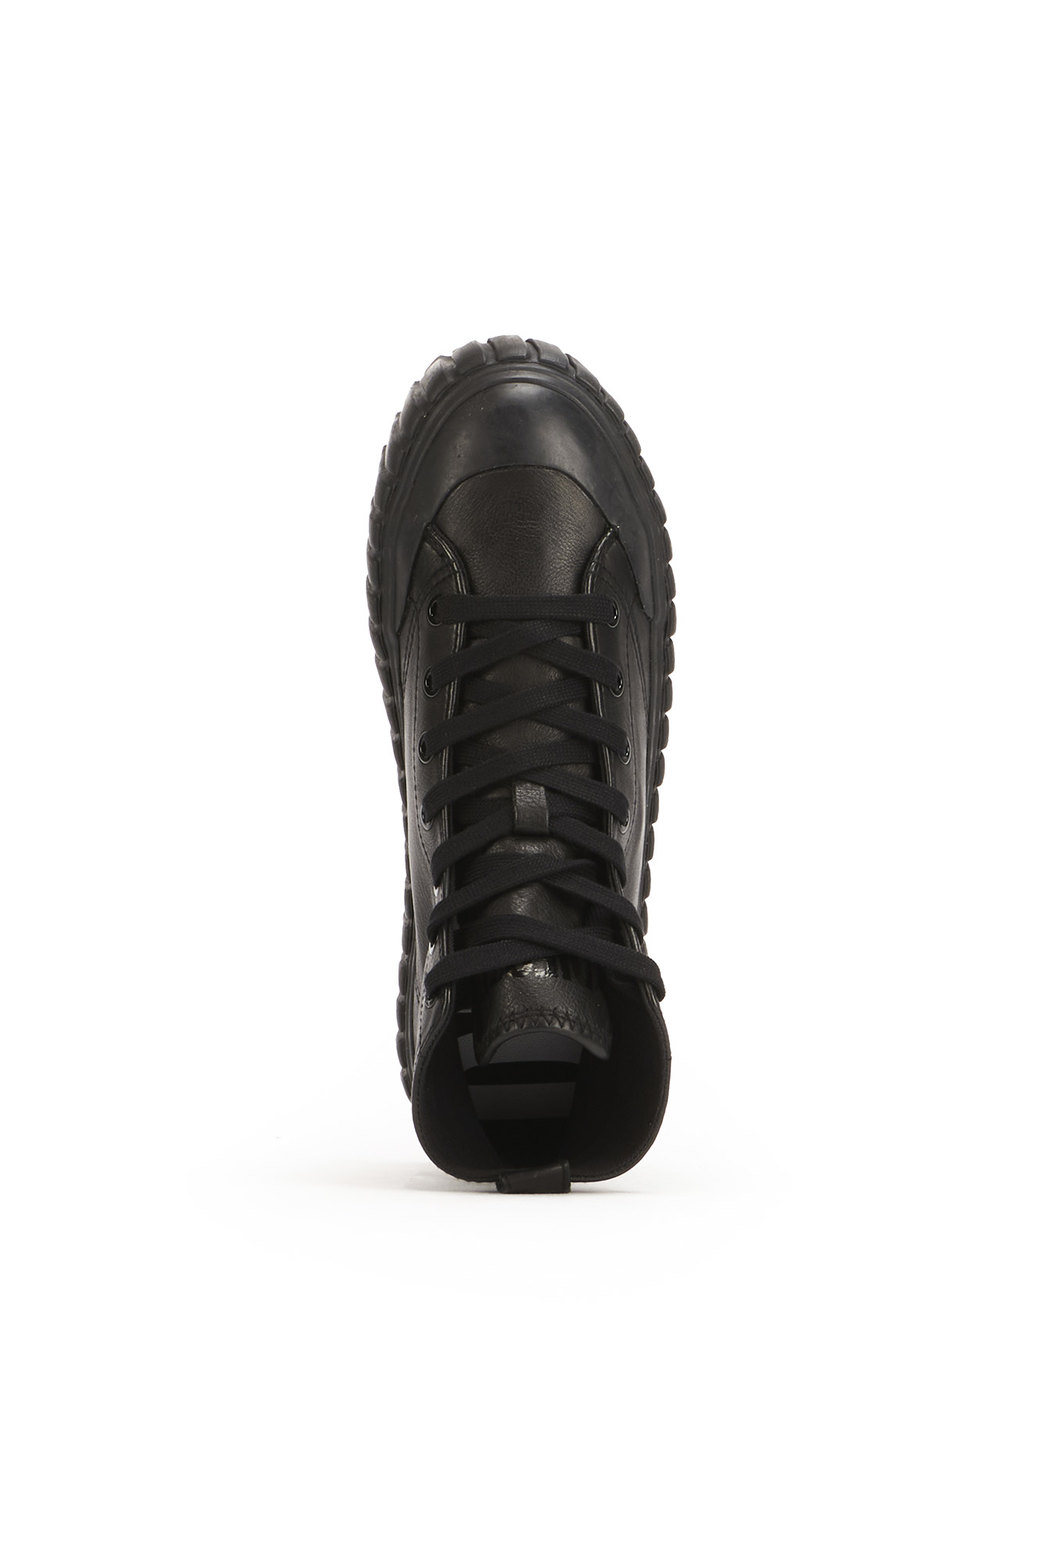 High-top flatform sneaker in leather